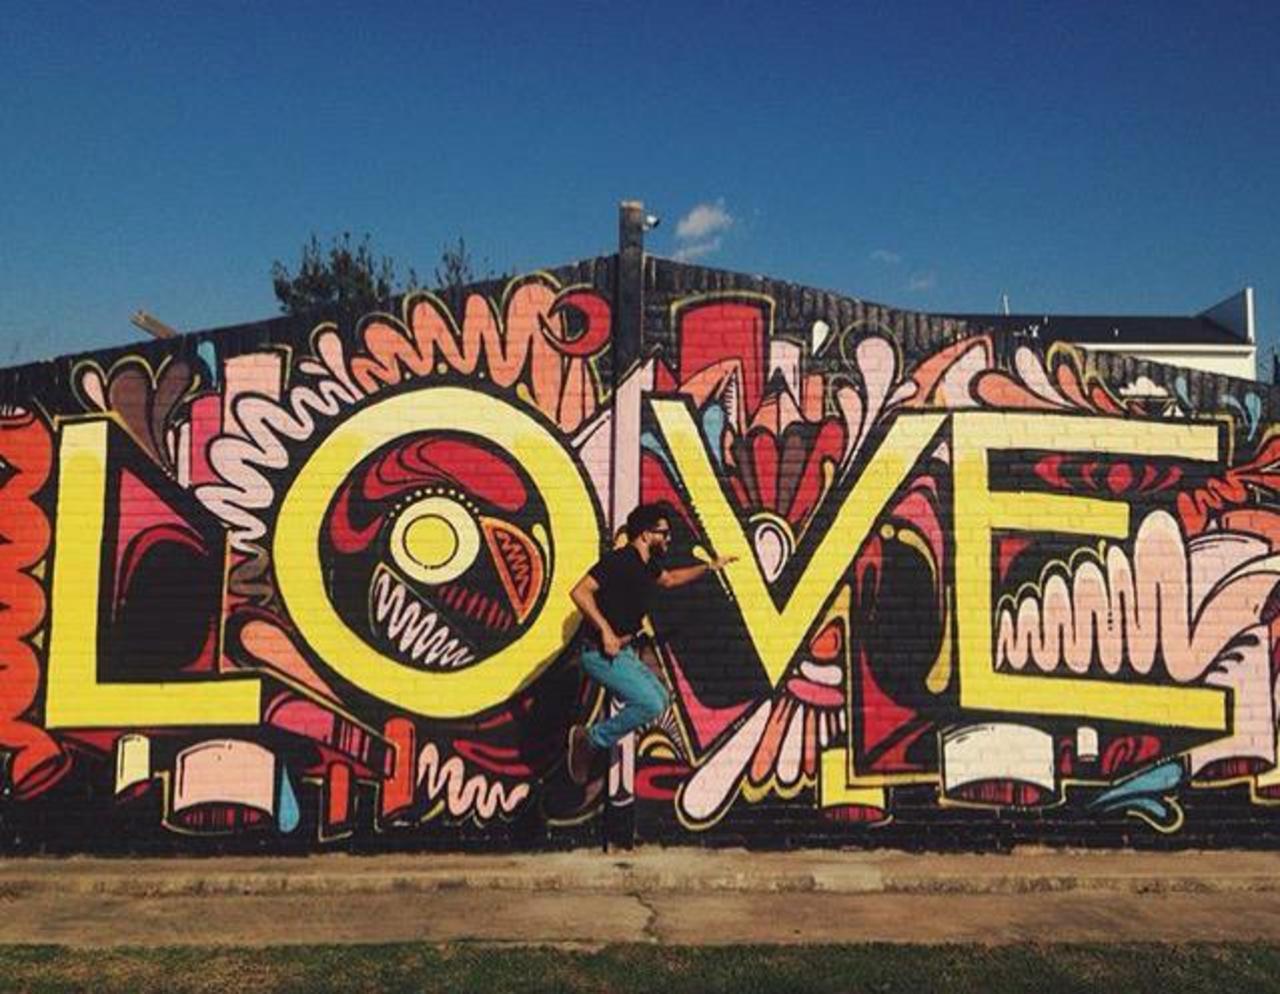 Love ❤️
Street Art by WileyArt

#art #graffiti #mural #streetart http://t.co/a8ZTutAmYW